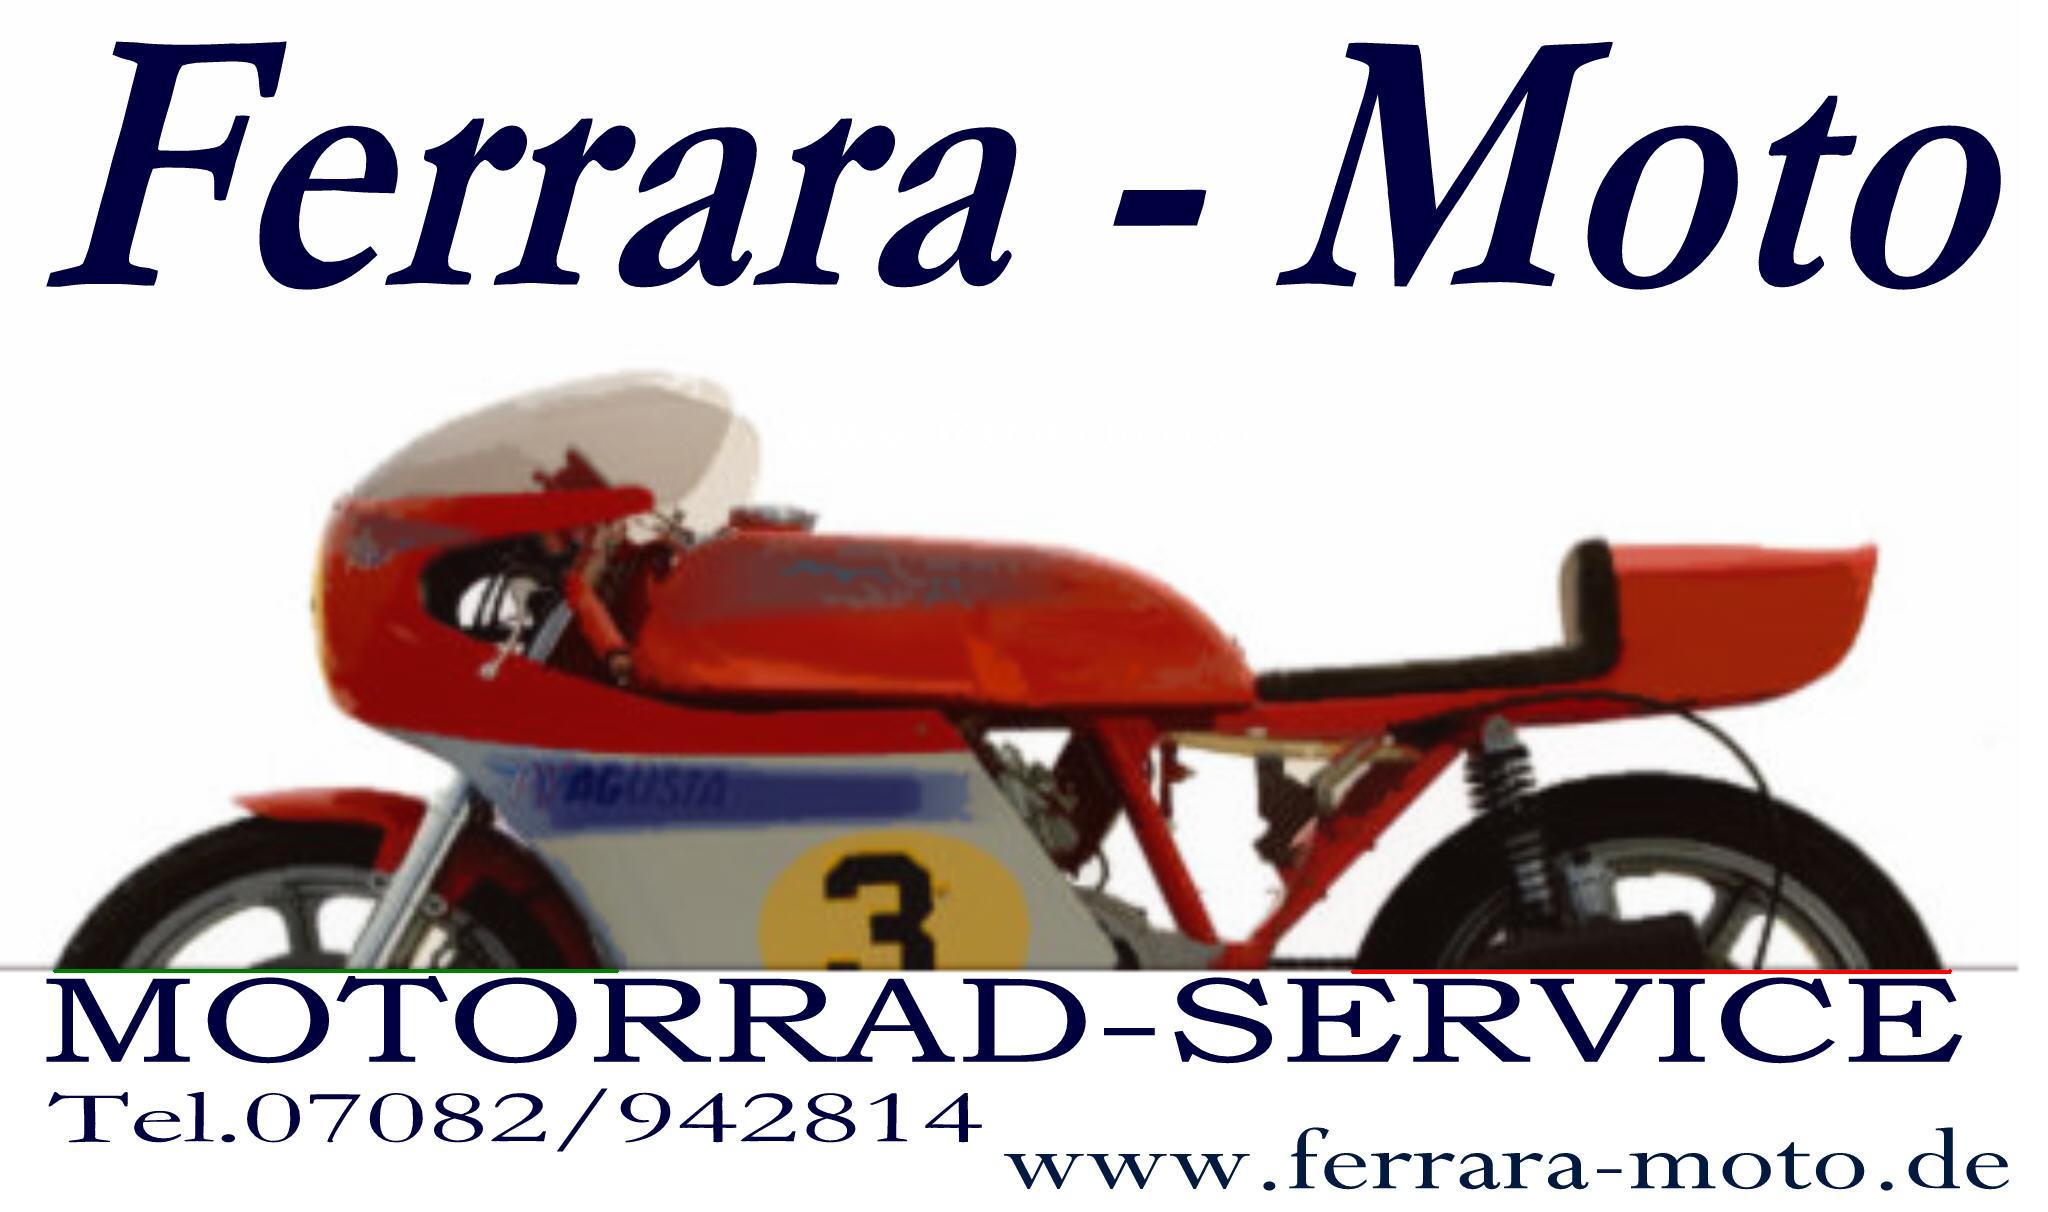 Ferrara-Moto Motorradservice